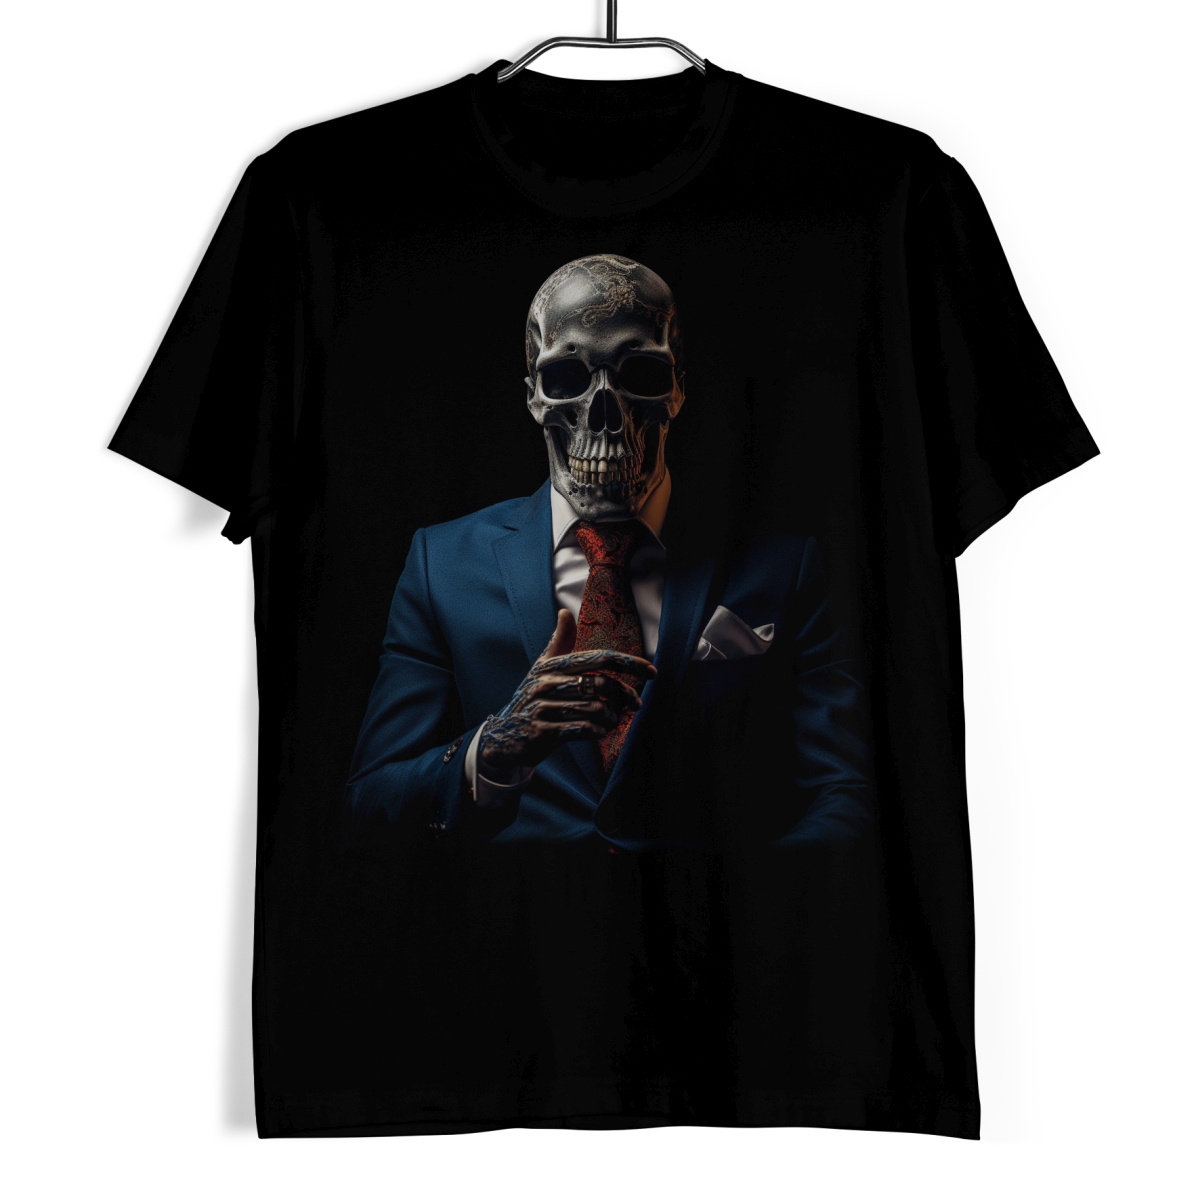 Tričko s lebkou - Elegance smrti 3XL